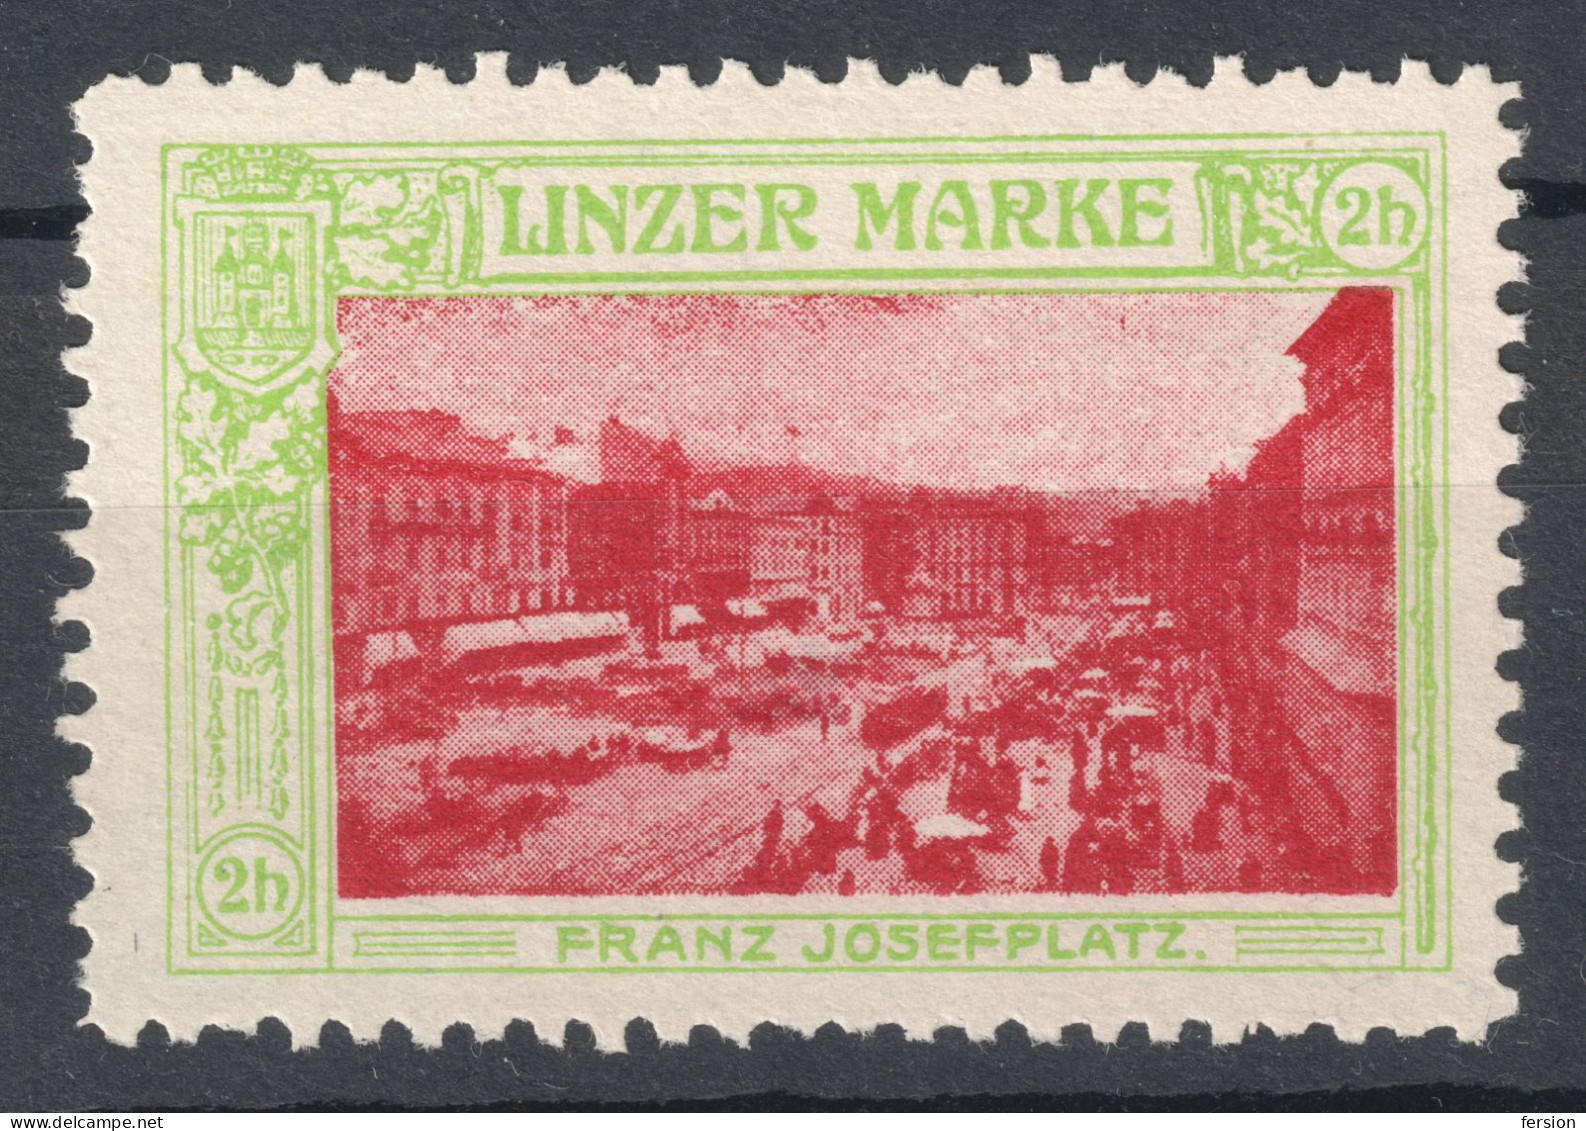 TRAM TRAMWAY Franz Joseph SQUARE - City LINZ 1910 Austria Charity Label Cinderella Vignette / LINZER MARKE - Tram